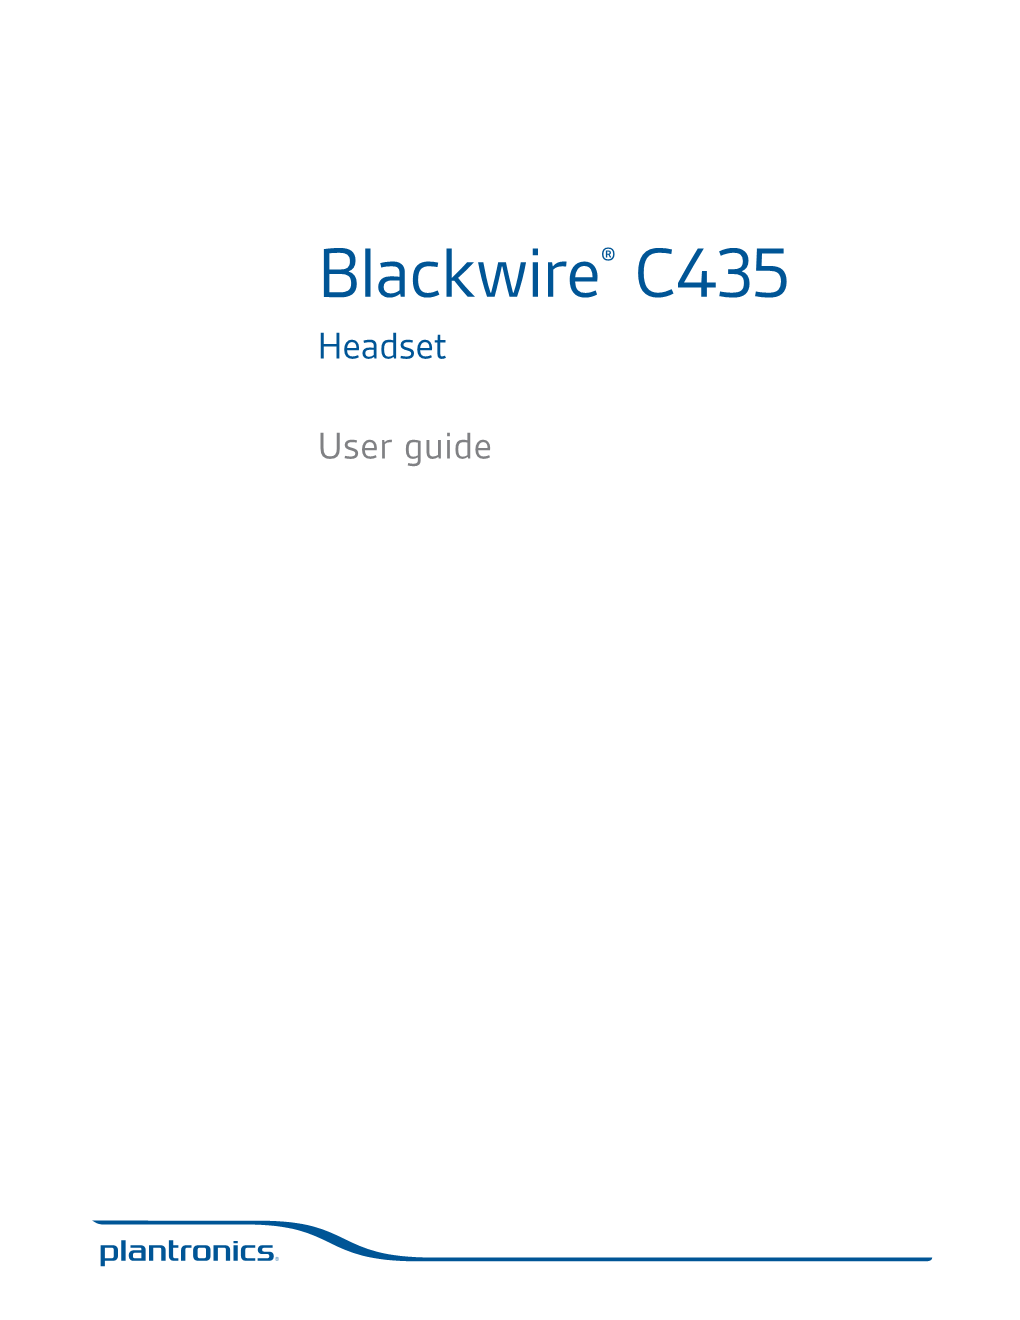 Blackwire C435 User Guide